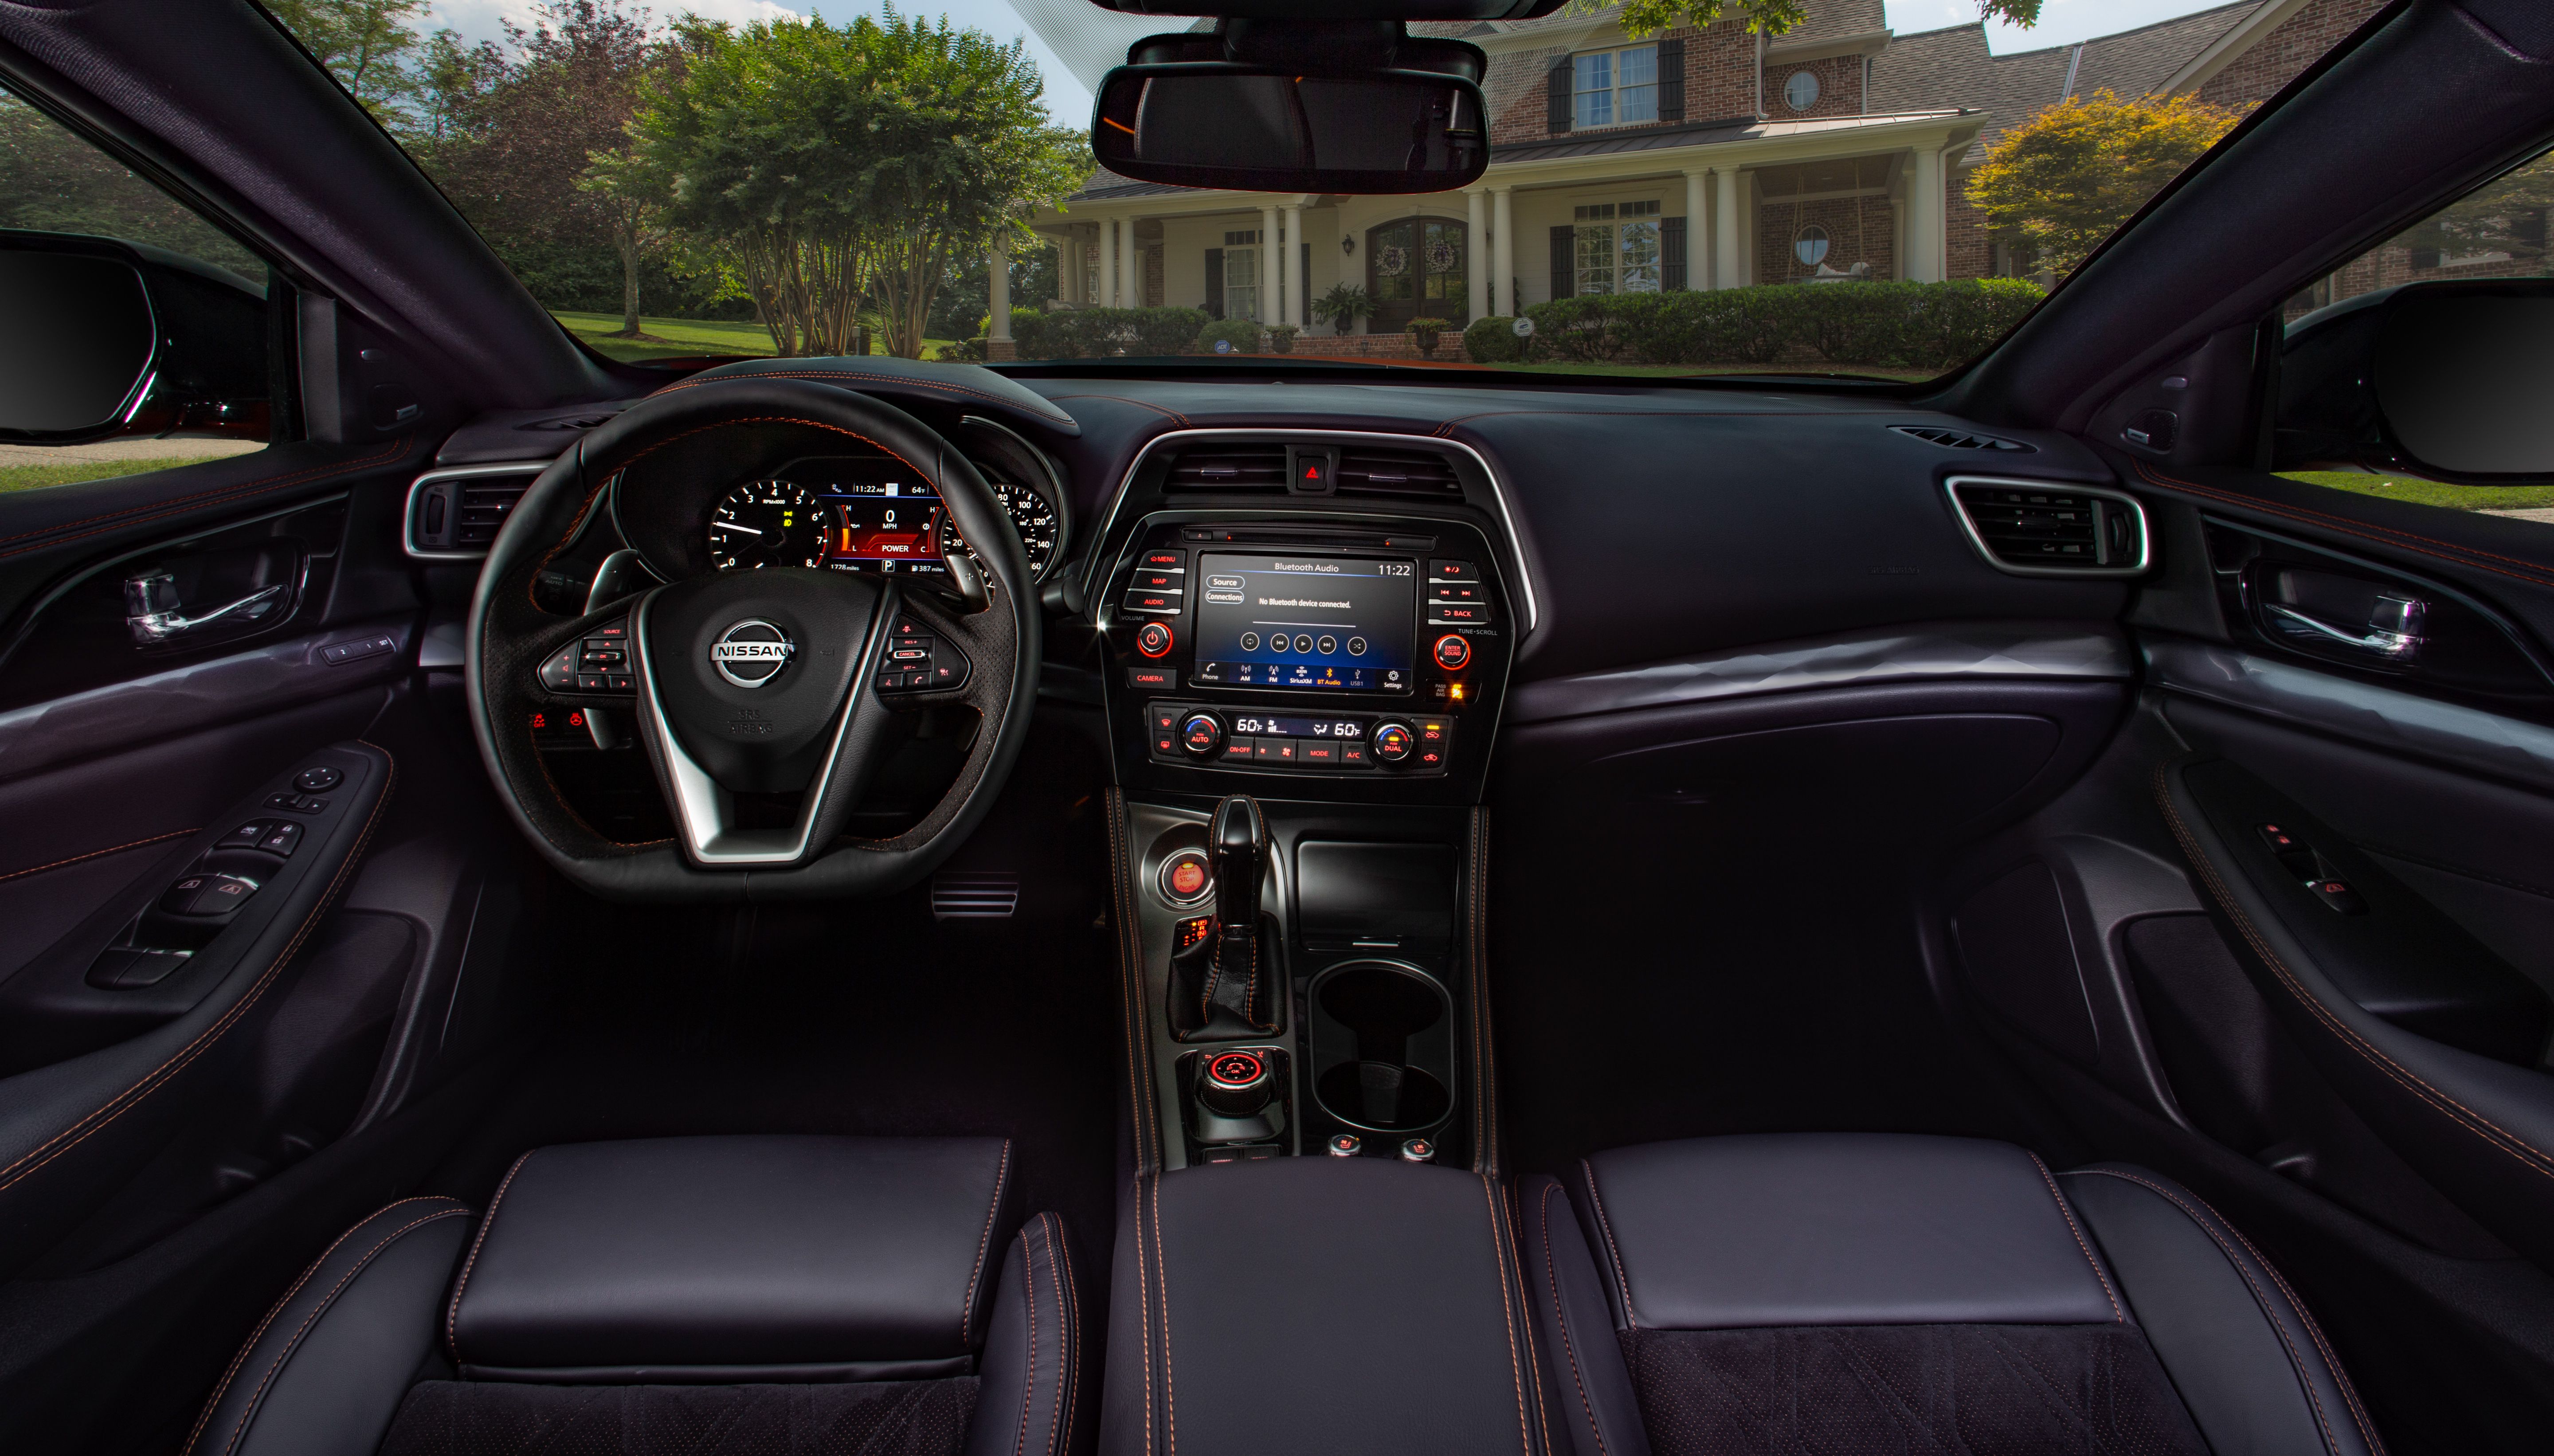 A Peek Inside The 2022 Nissan Maxima's Interior